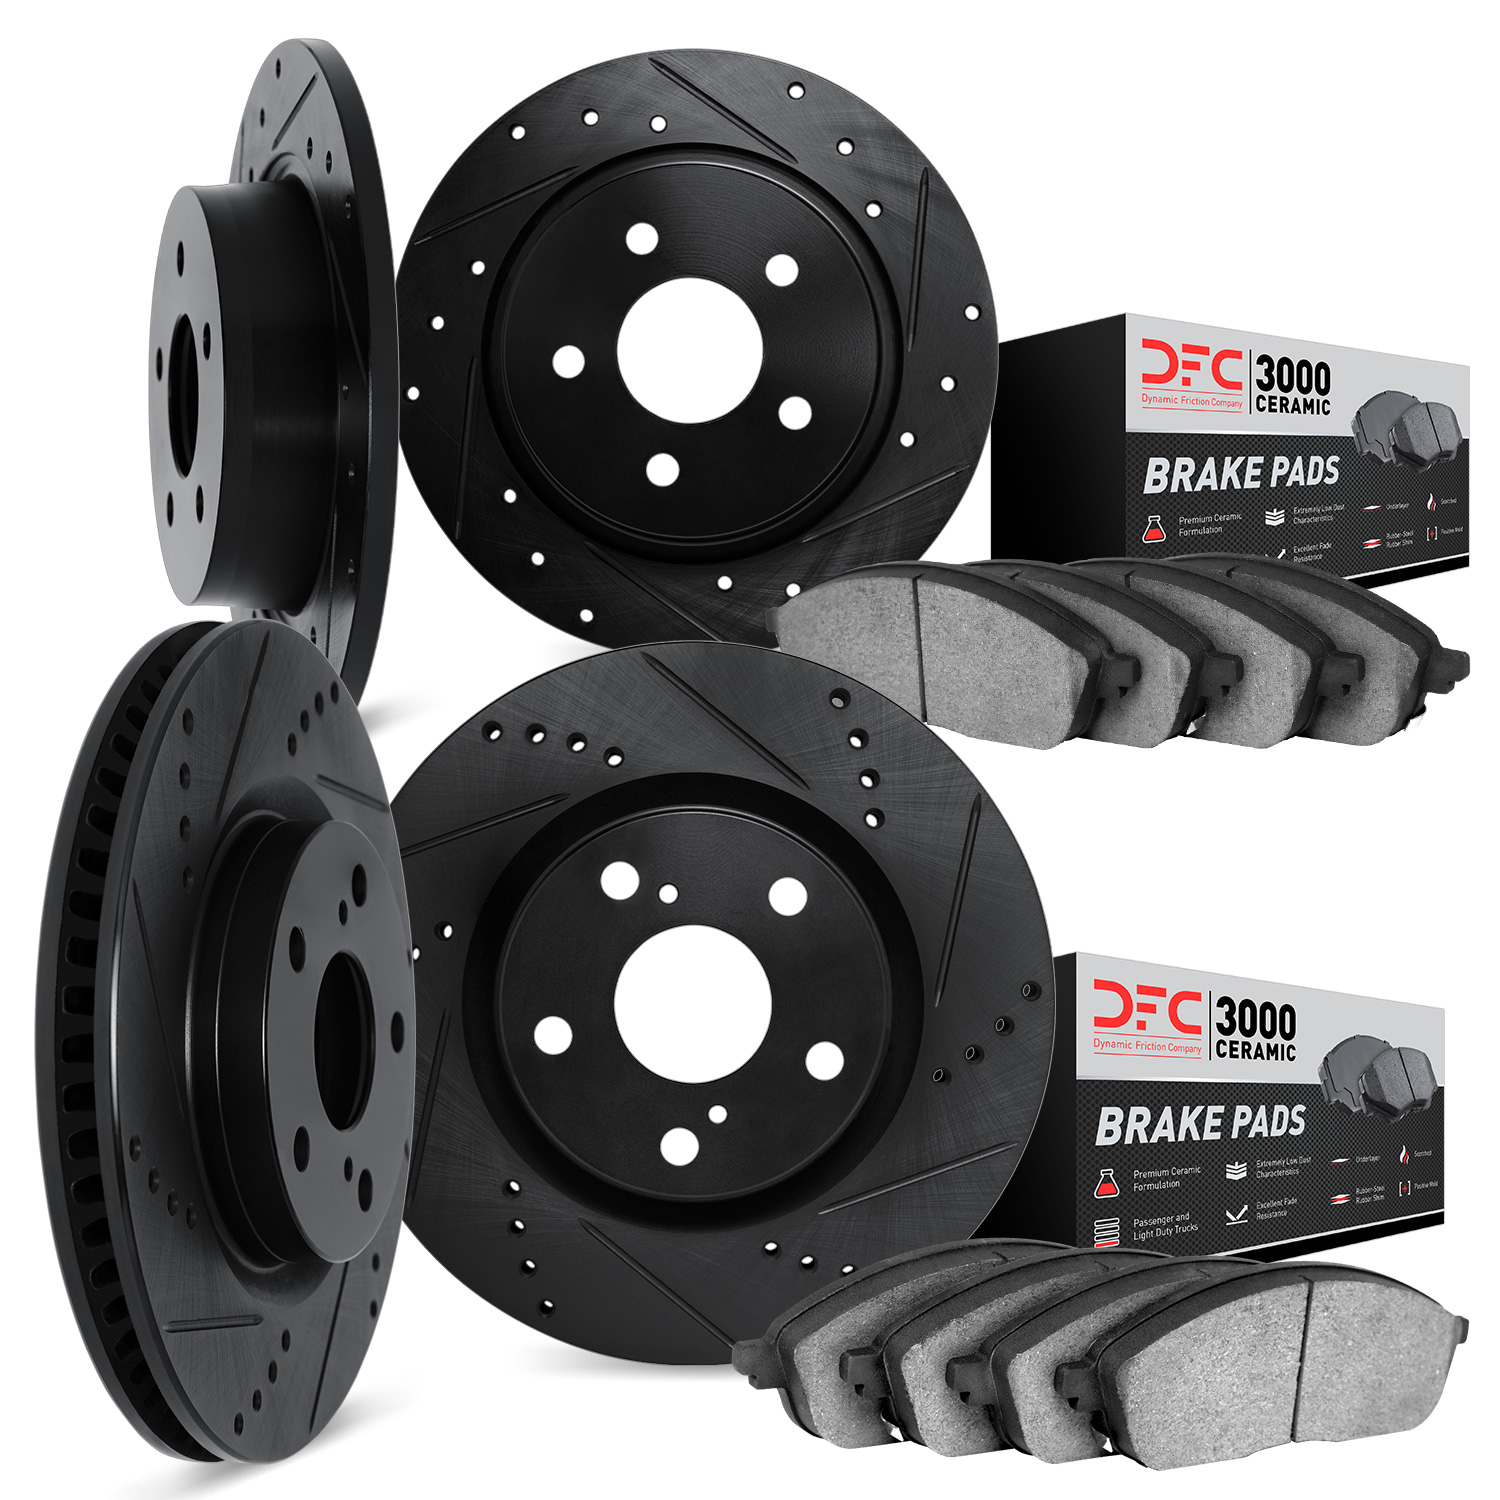 8304-54113 Drilled/Slotted Brake Rotors with 3000-Series Ceramic Brake Pads Kit [Black], 2013-2018 Ford/Lincoln/Mercury/Mazda, P